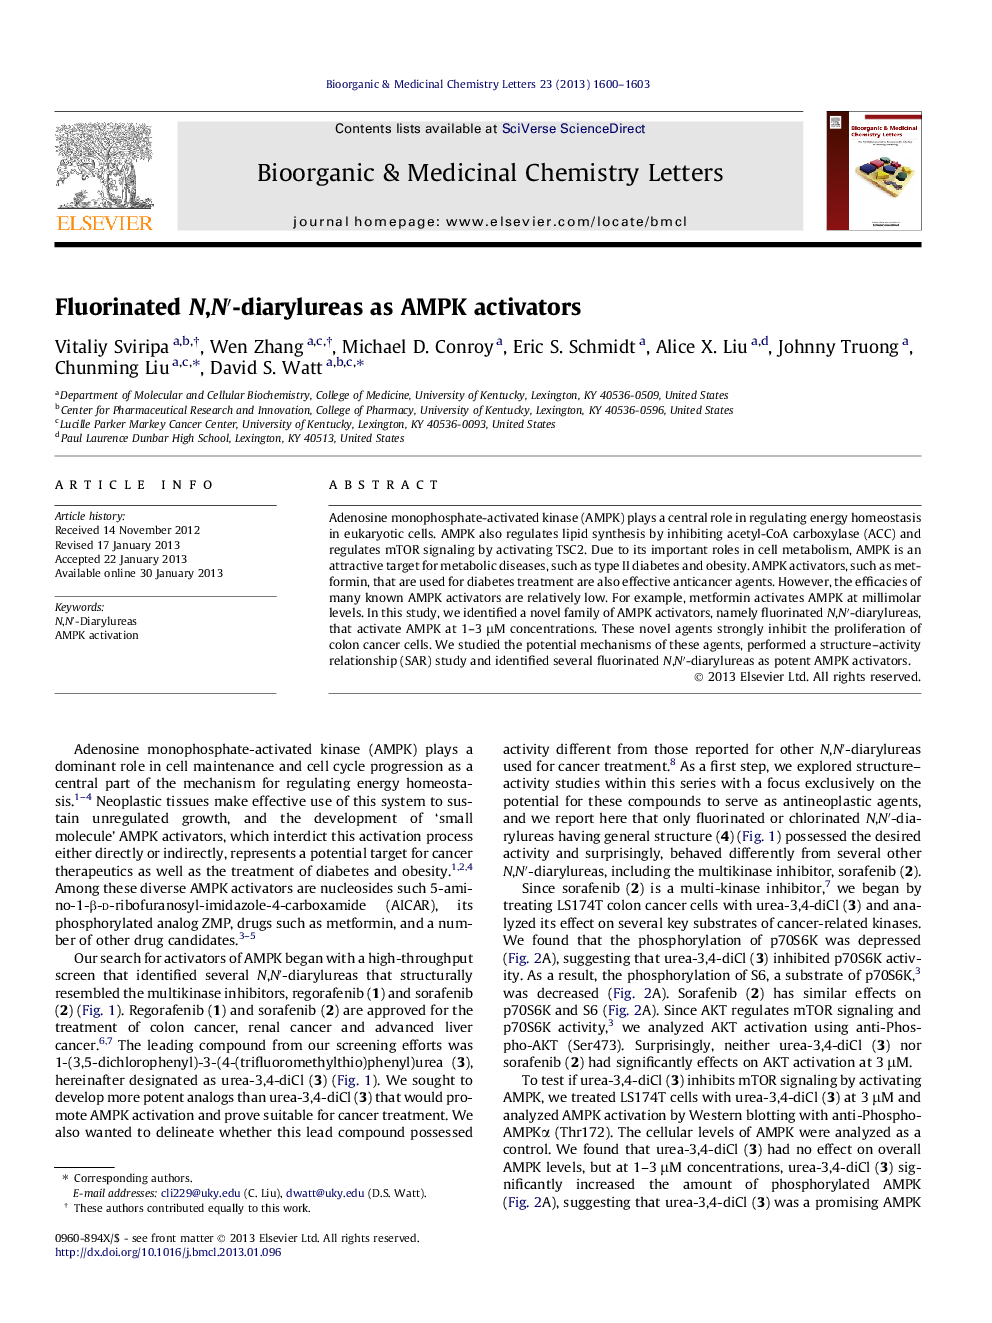 Fluorinated N,N′-diarylureas as AMPK activators